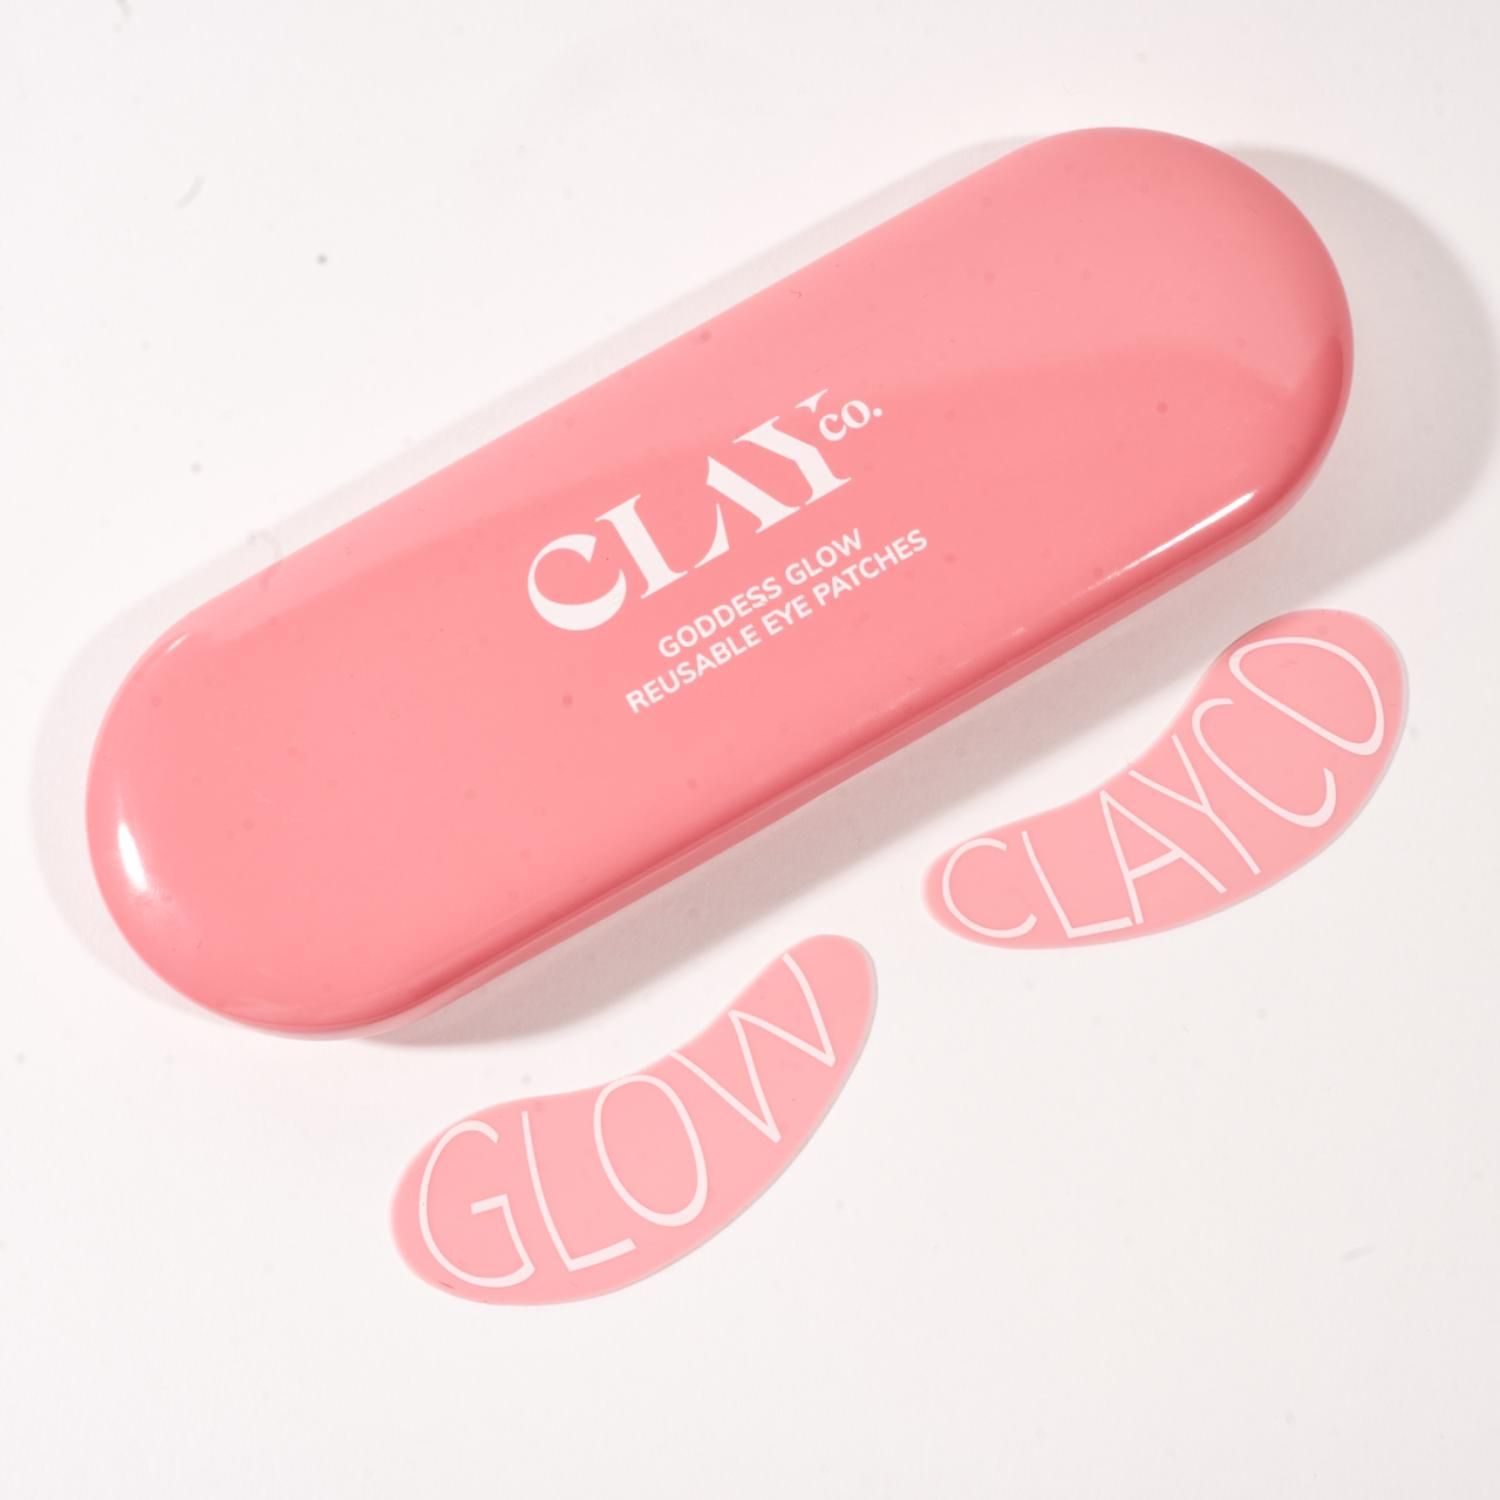 Buy ClayCo Goddess Glow De-puffing Reusable Eye Mask 20 g - Purplle